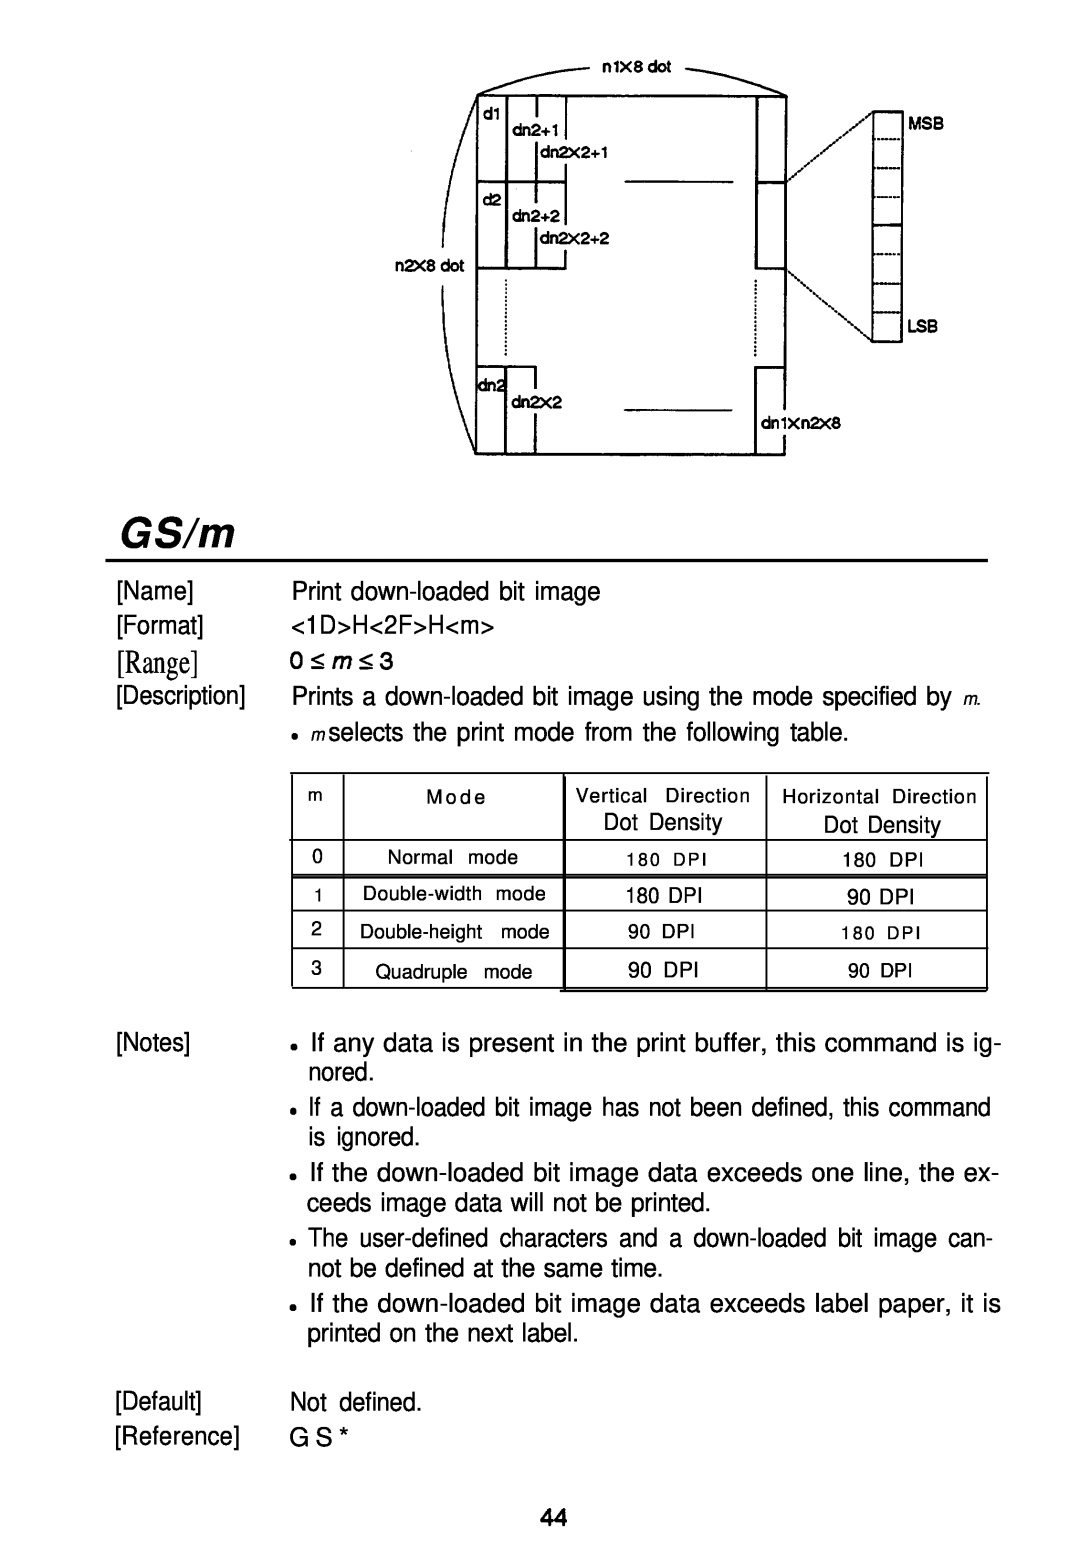 Seiko Group TM-L60 manual GS/m, Range 